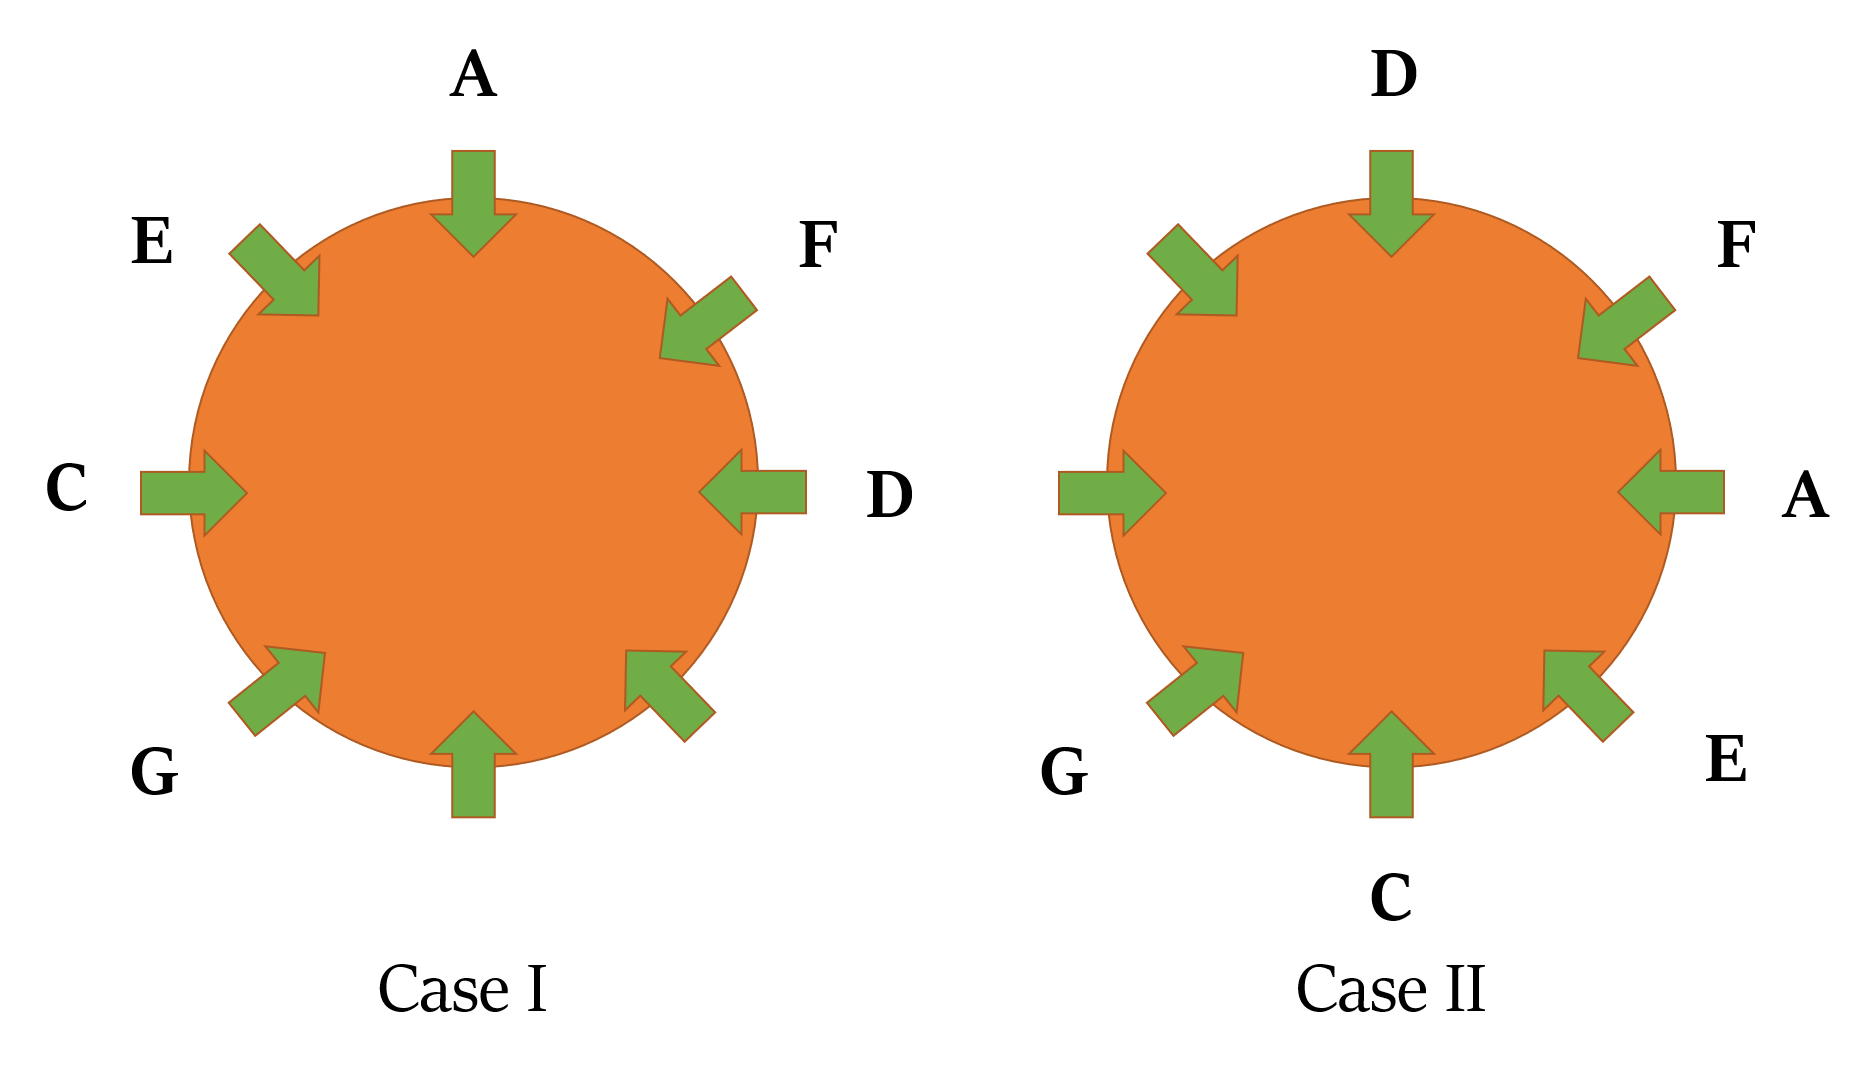 Circular arrangement